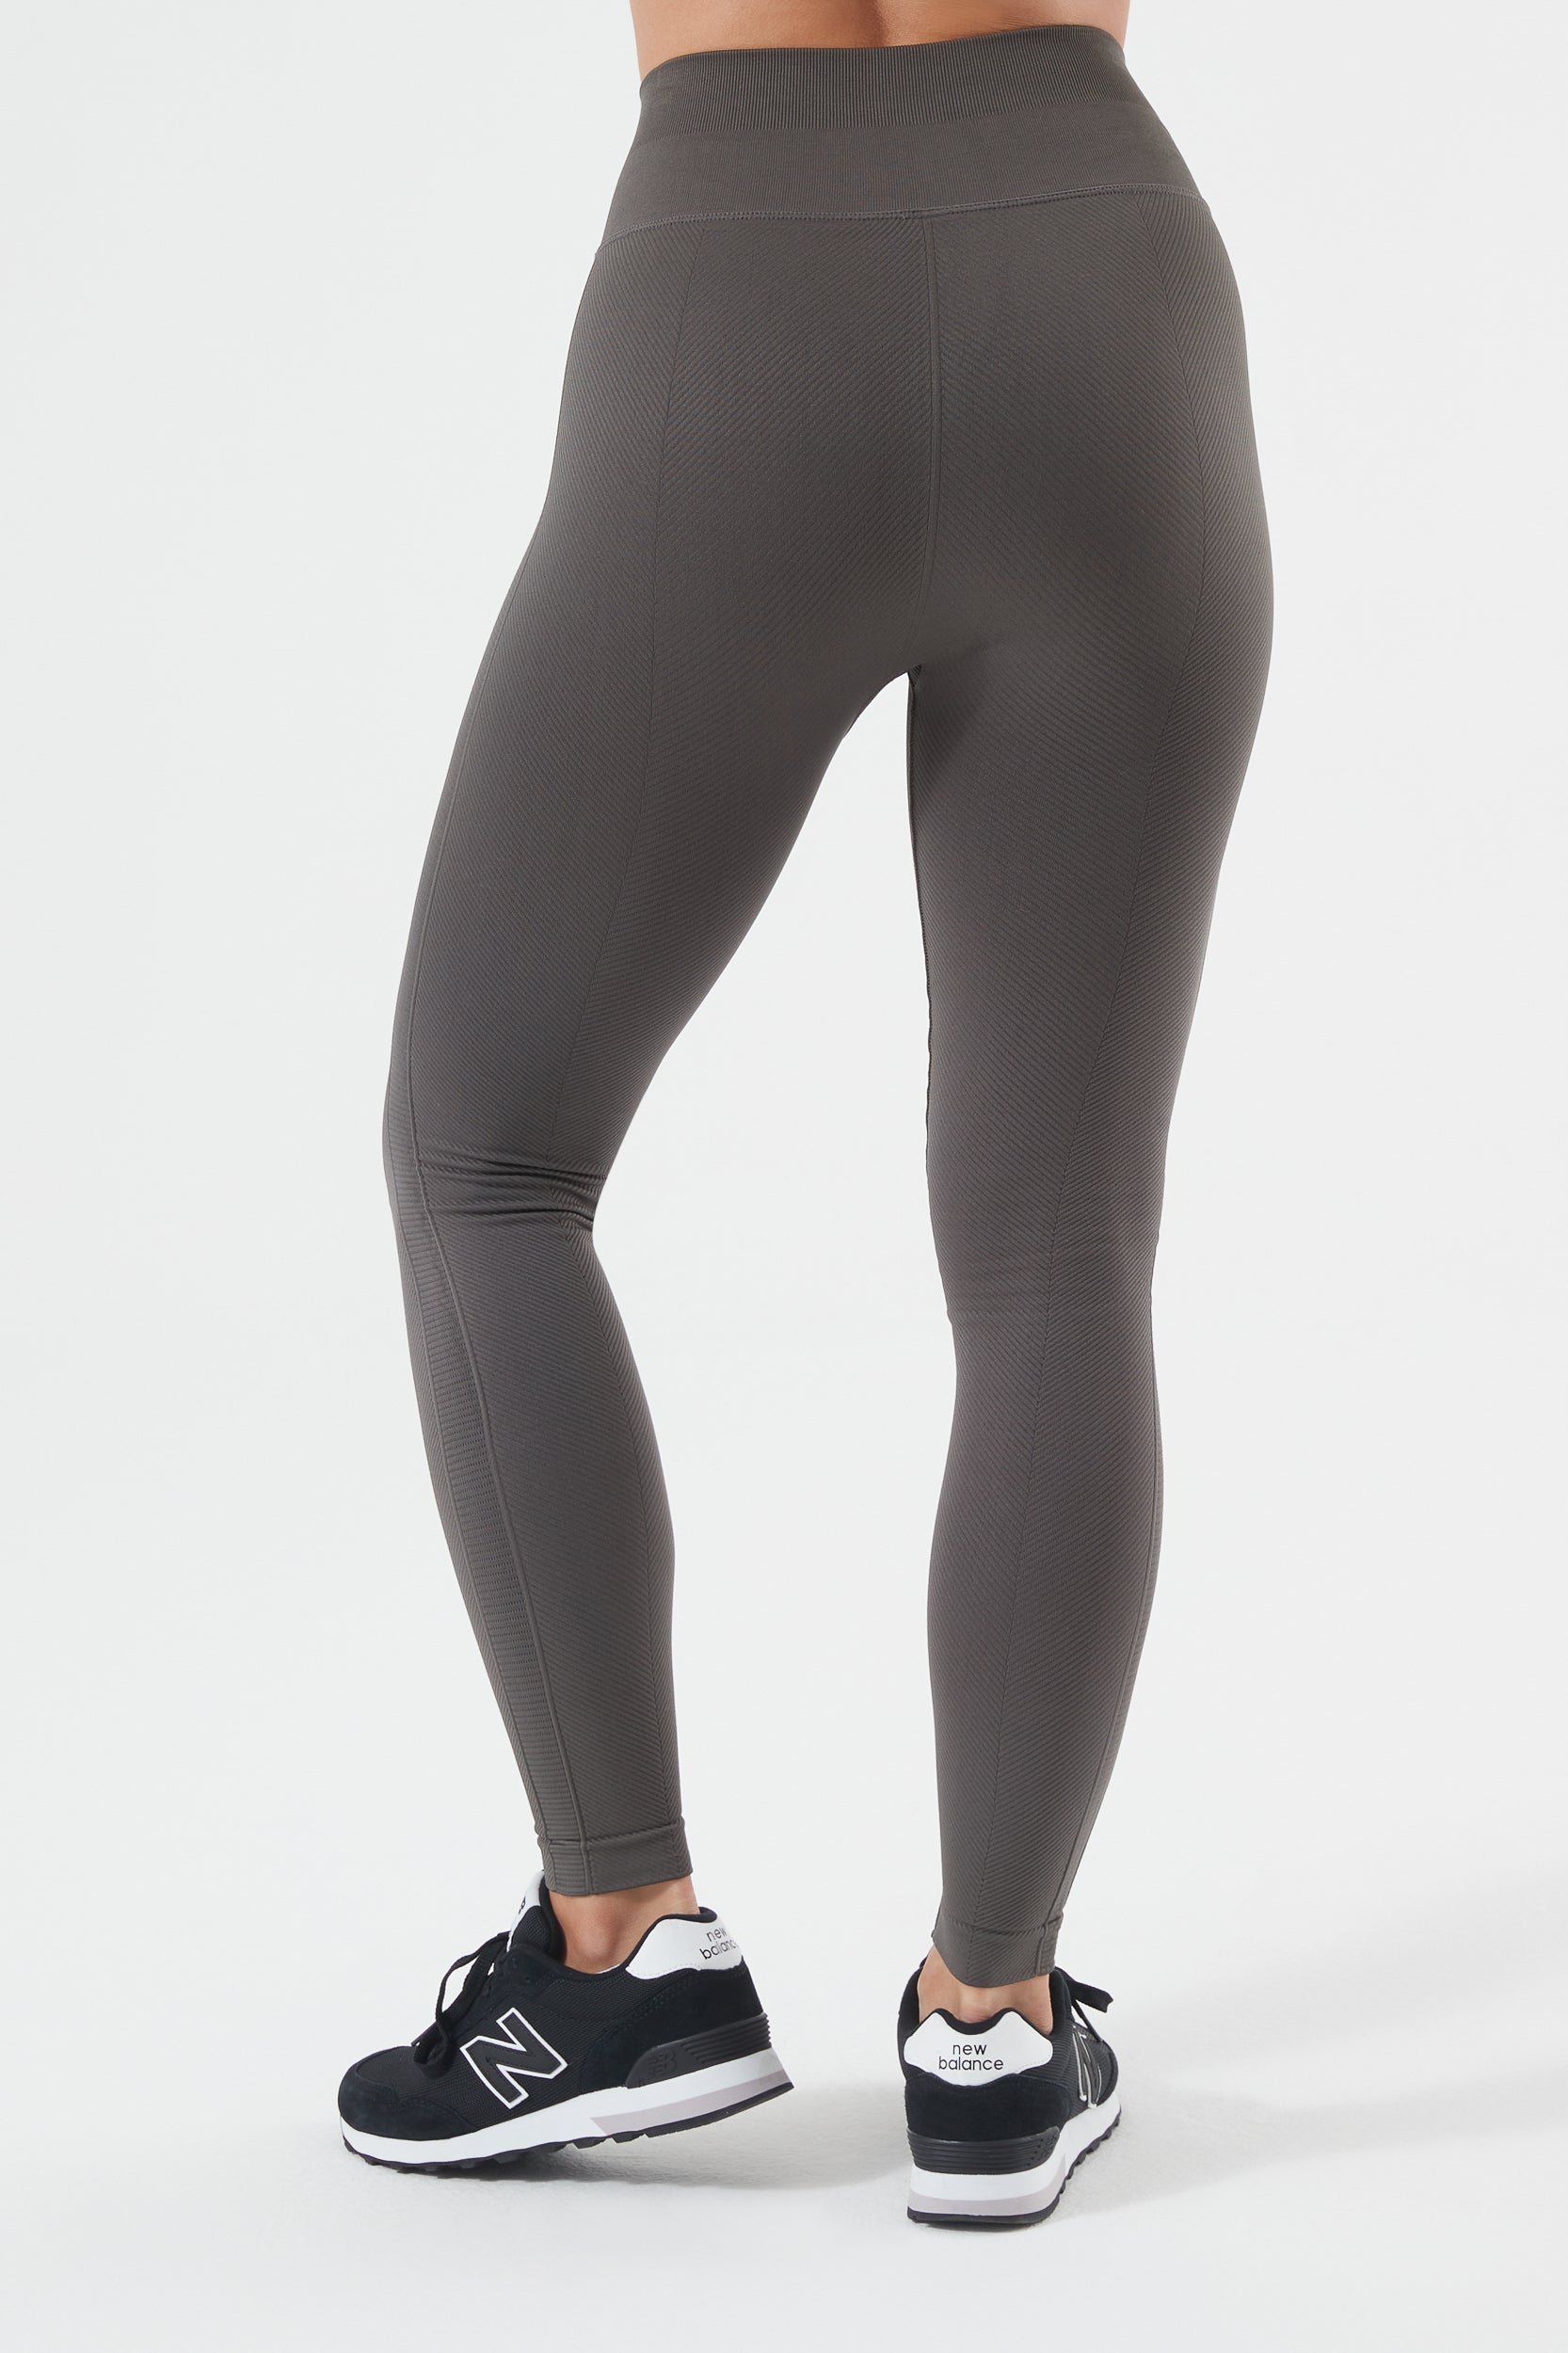 Nike Multi Color Black Leggings Size XL - 58% off